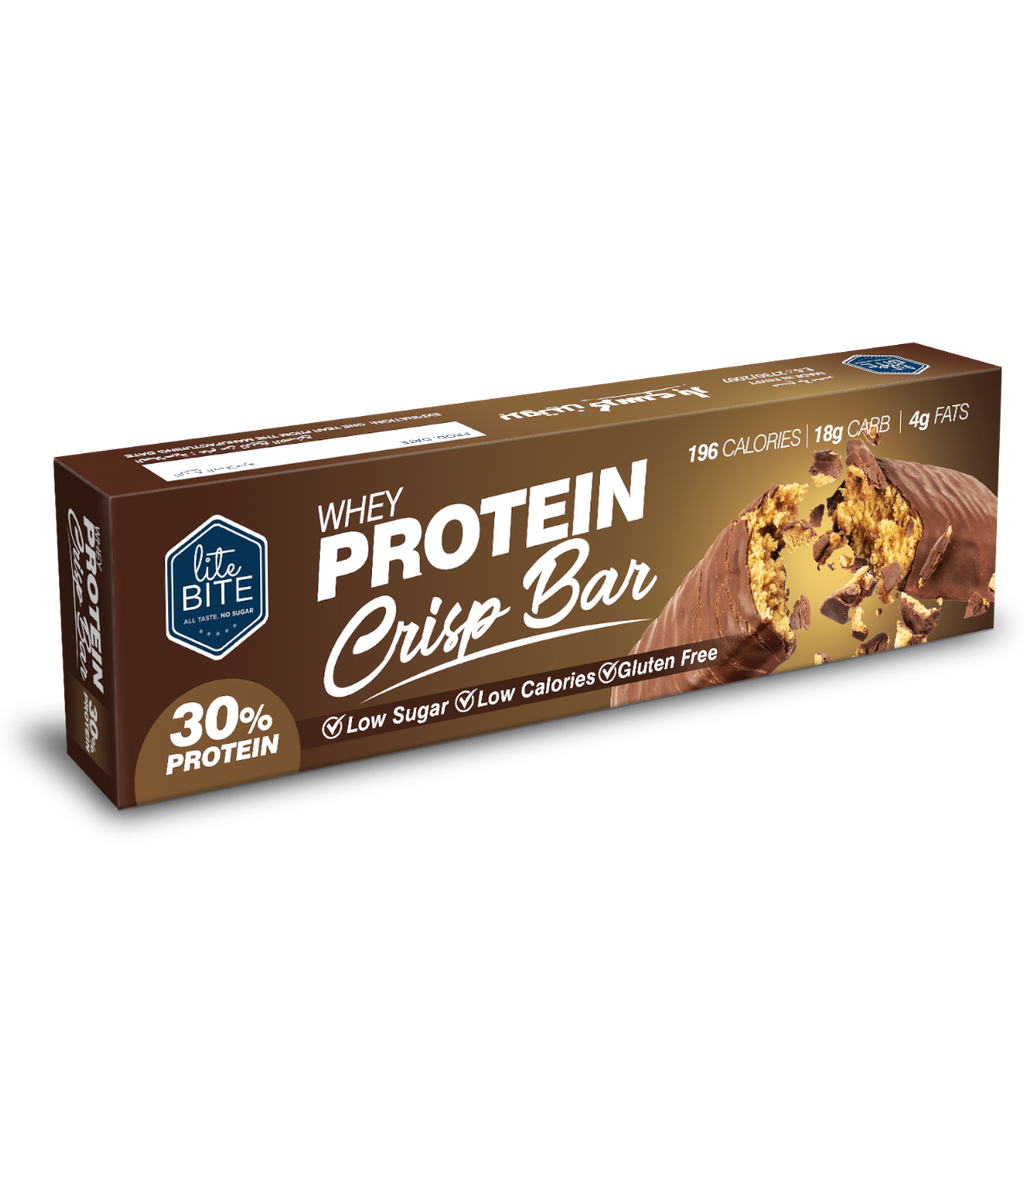 Protein Crisp Bar - بروتين كرسب بار